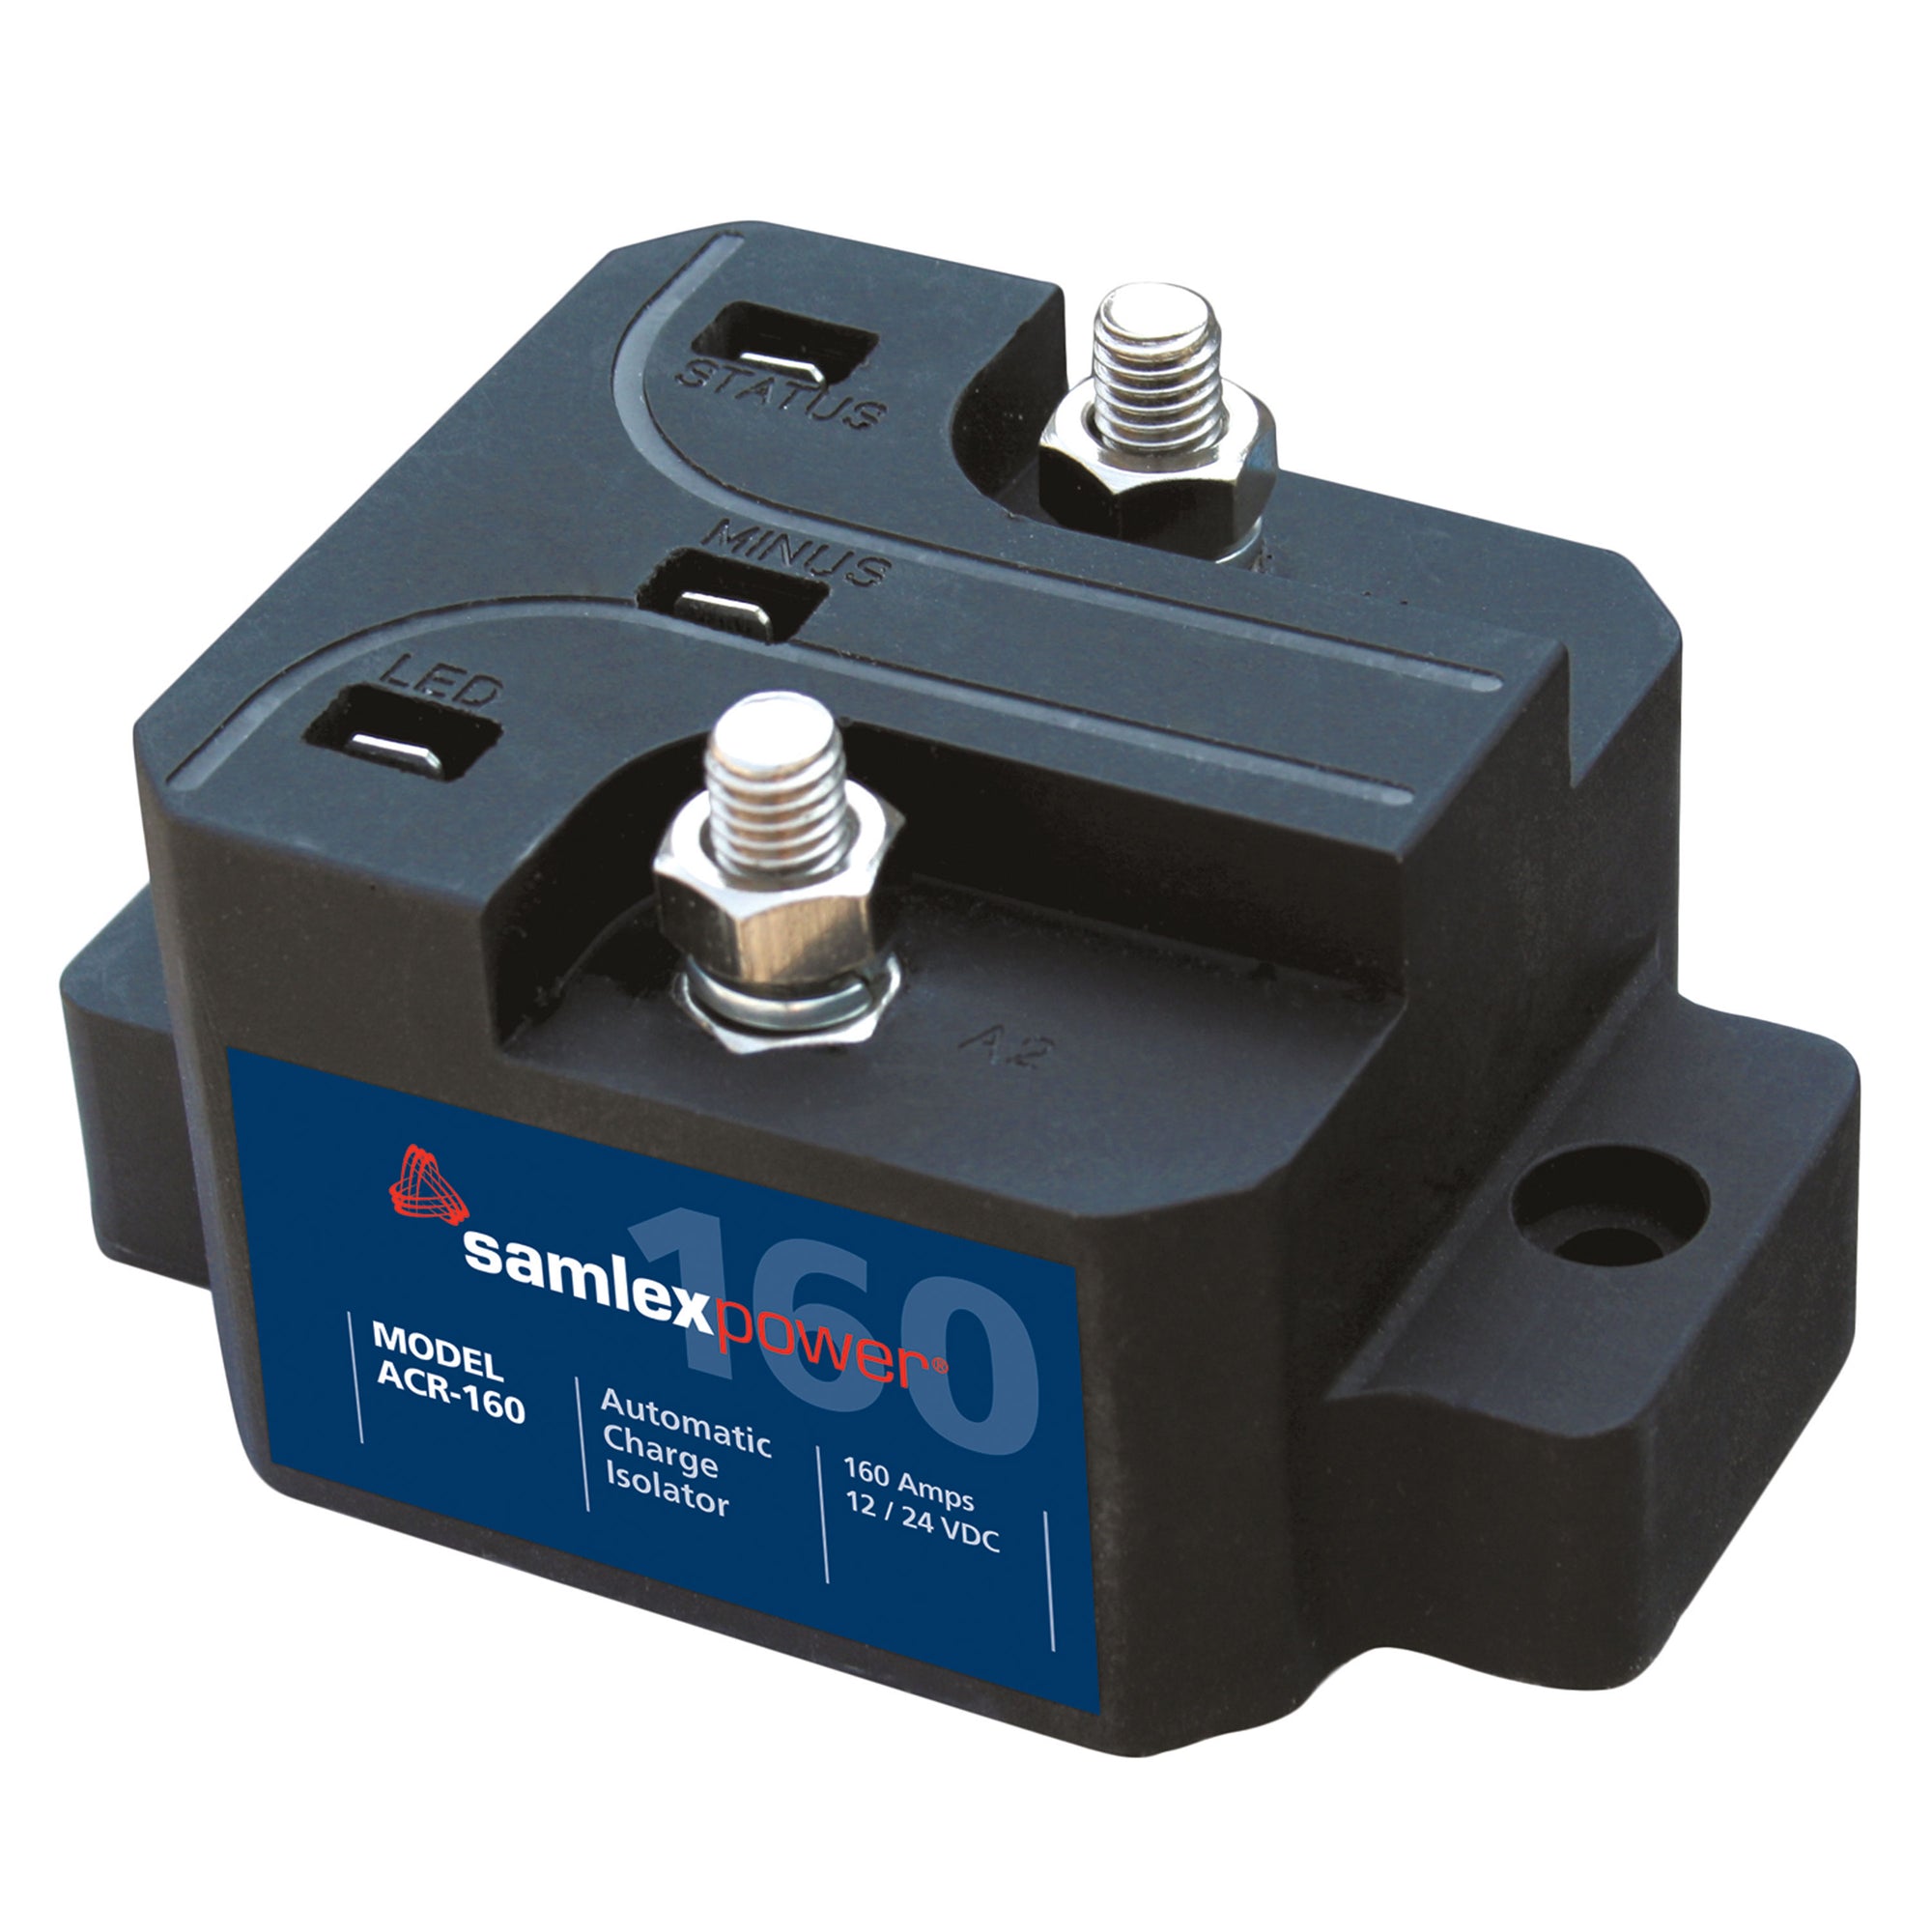 Samlex ACR-160 Automatic Charge Isolator